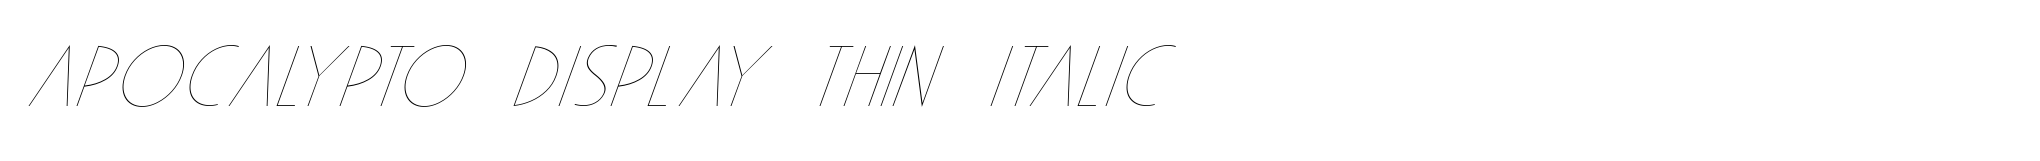 Apocalypto Display Thin Italic image